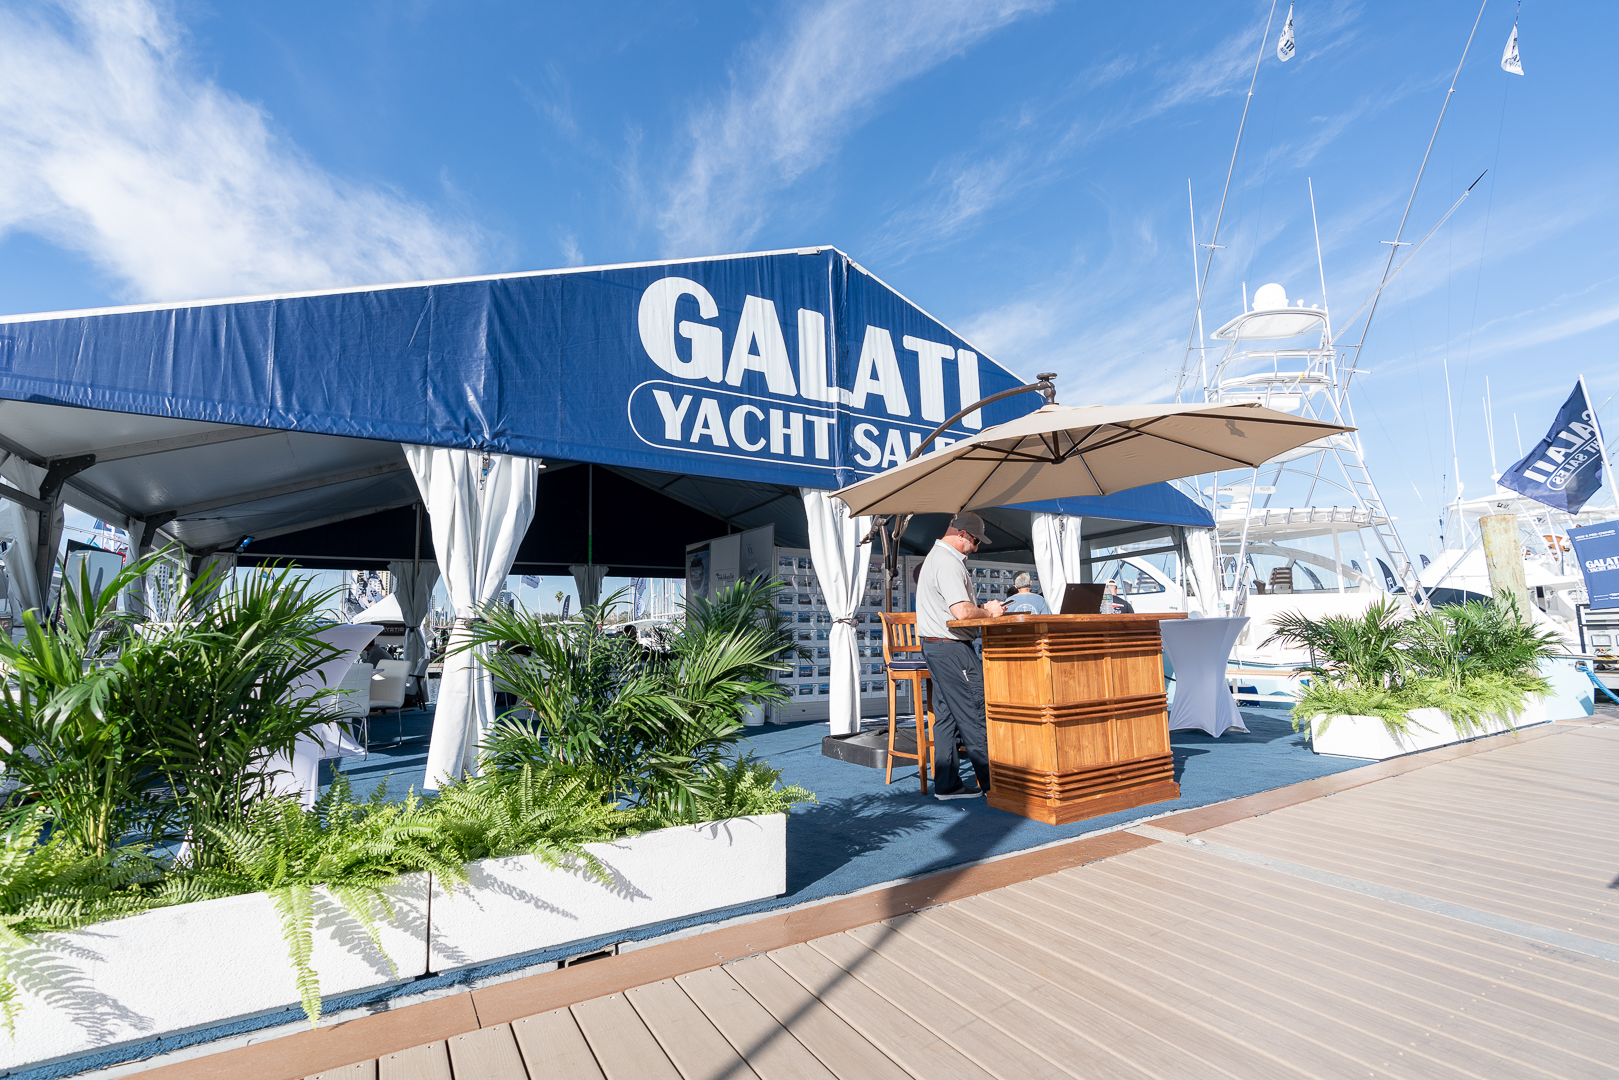 Galati at the 2022 St. Petersburg Power & Sailboat Show